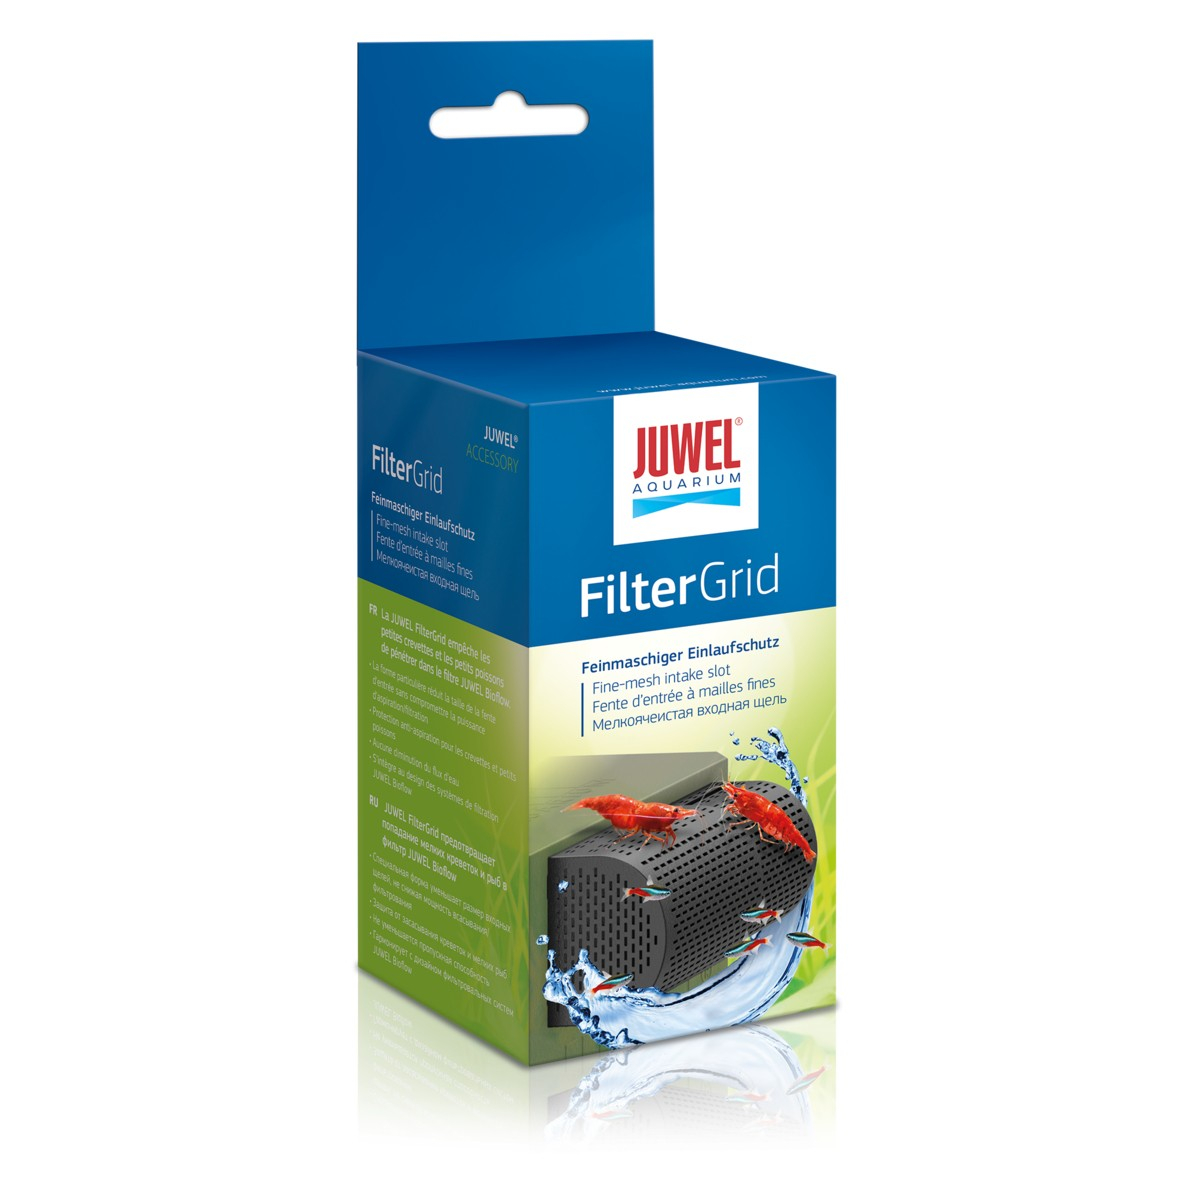 FilterGrid protecção para invertebrados Juwel